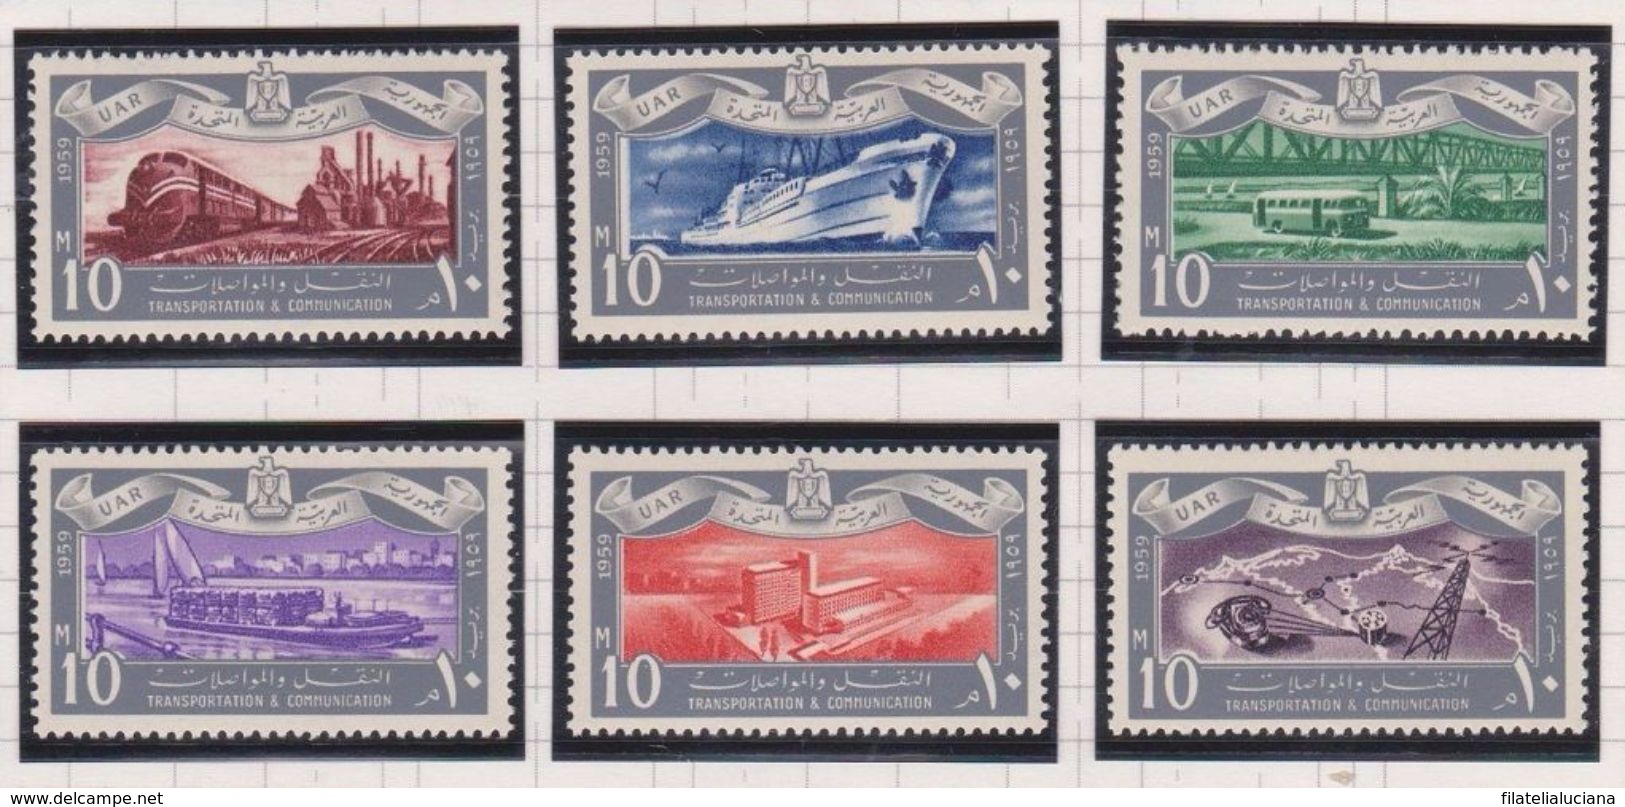 EGYPT - 1959 Railroad - Trains. Sc-467-472. MNH - Unused Stamps